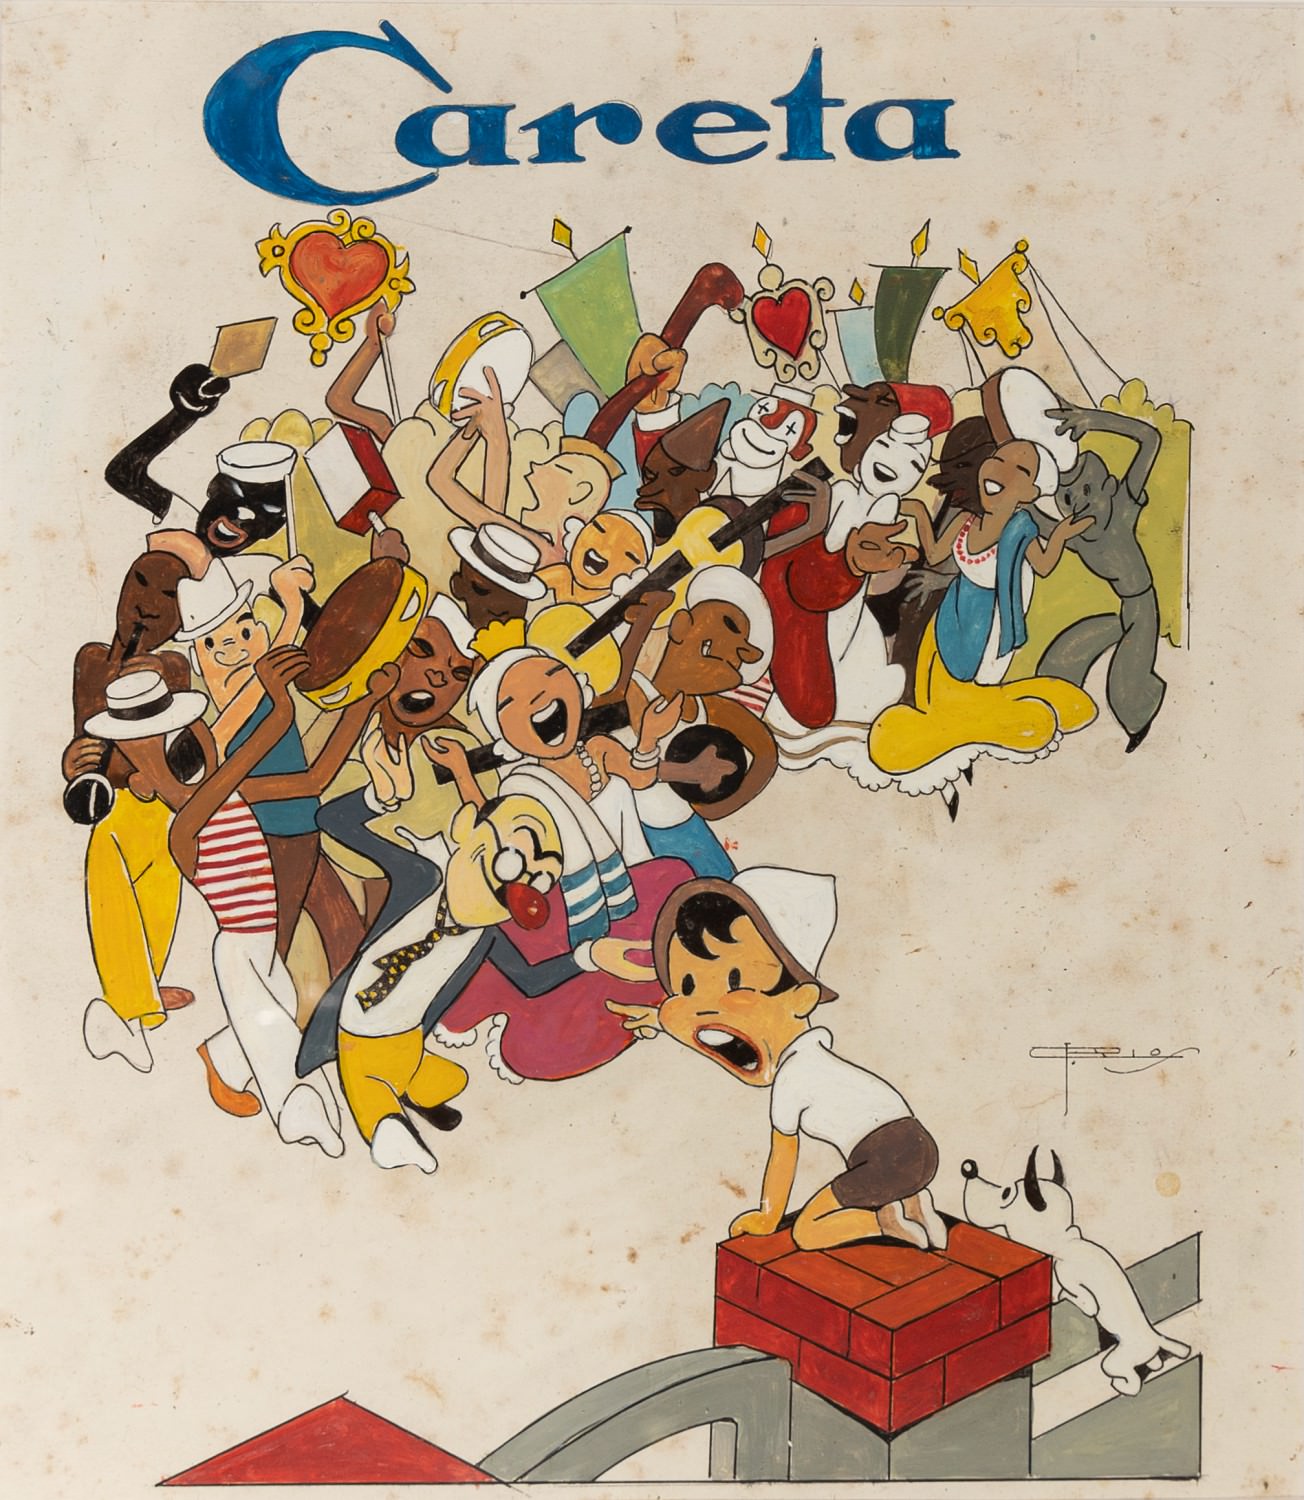 J. Carlos - Careta (Capa Revista)